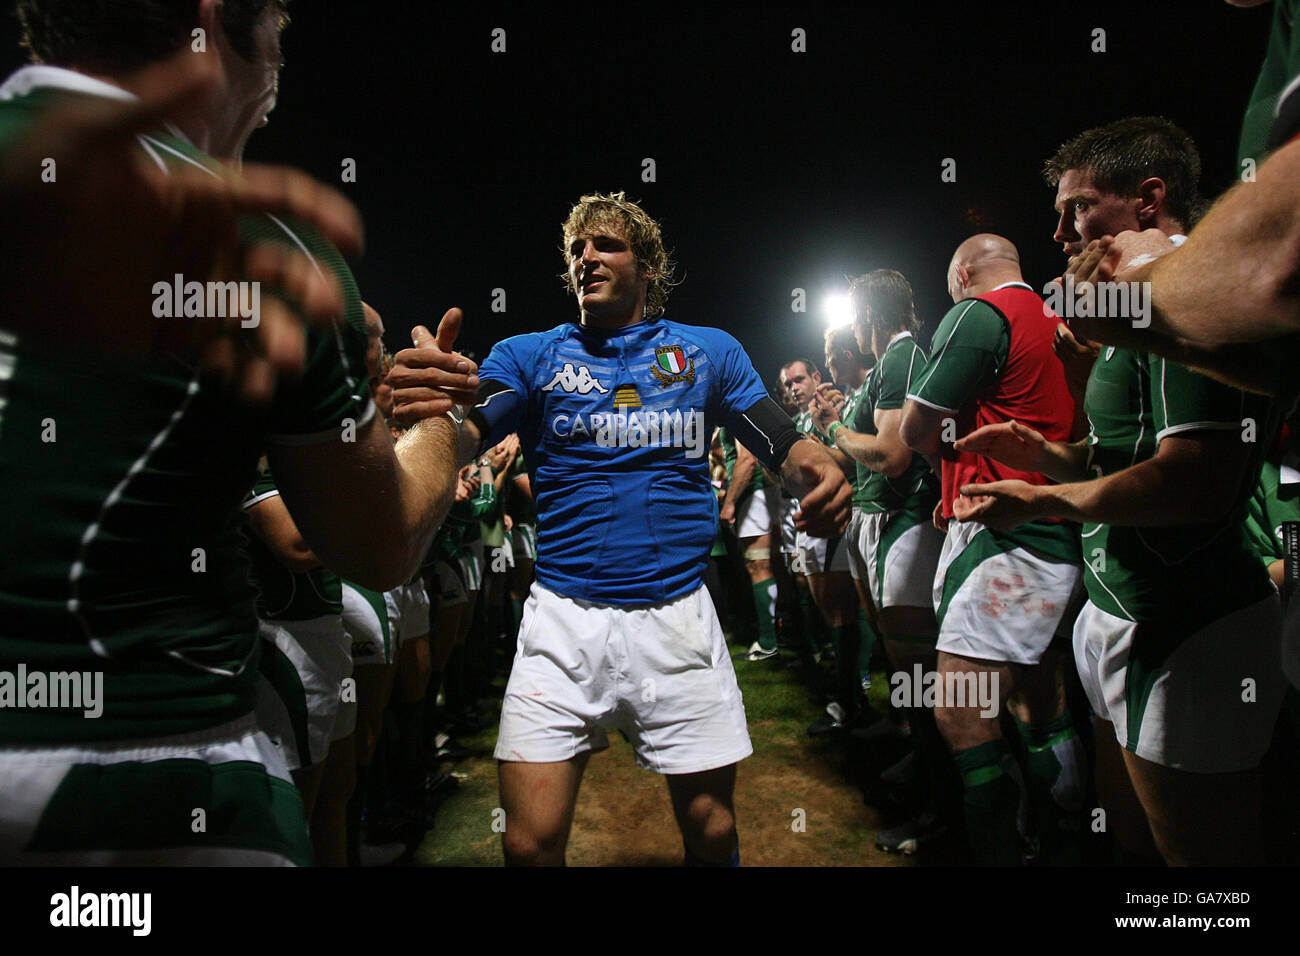 Rugby Union - International - Ireland v Italy - Ravenhill Stock Photo